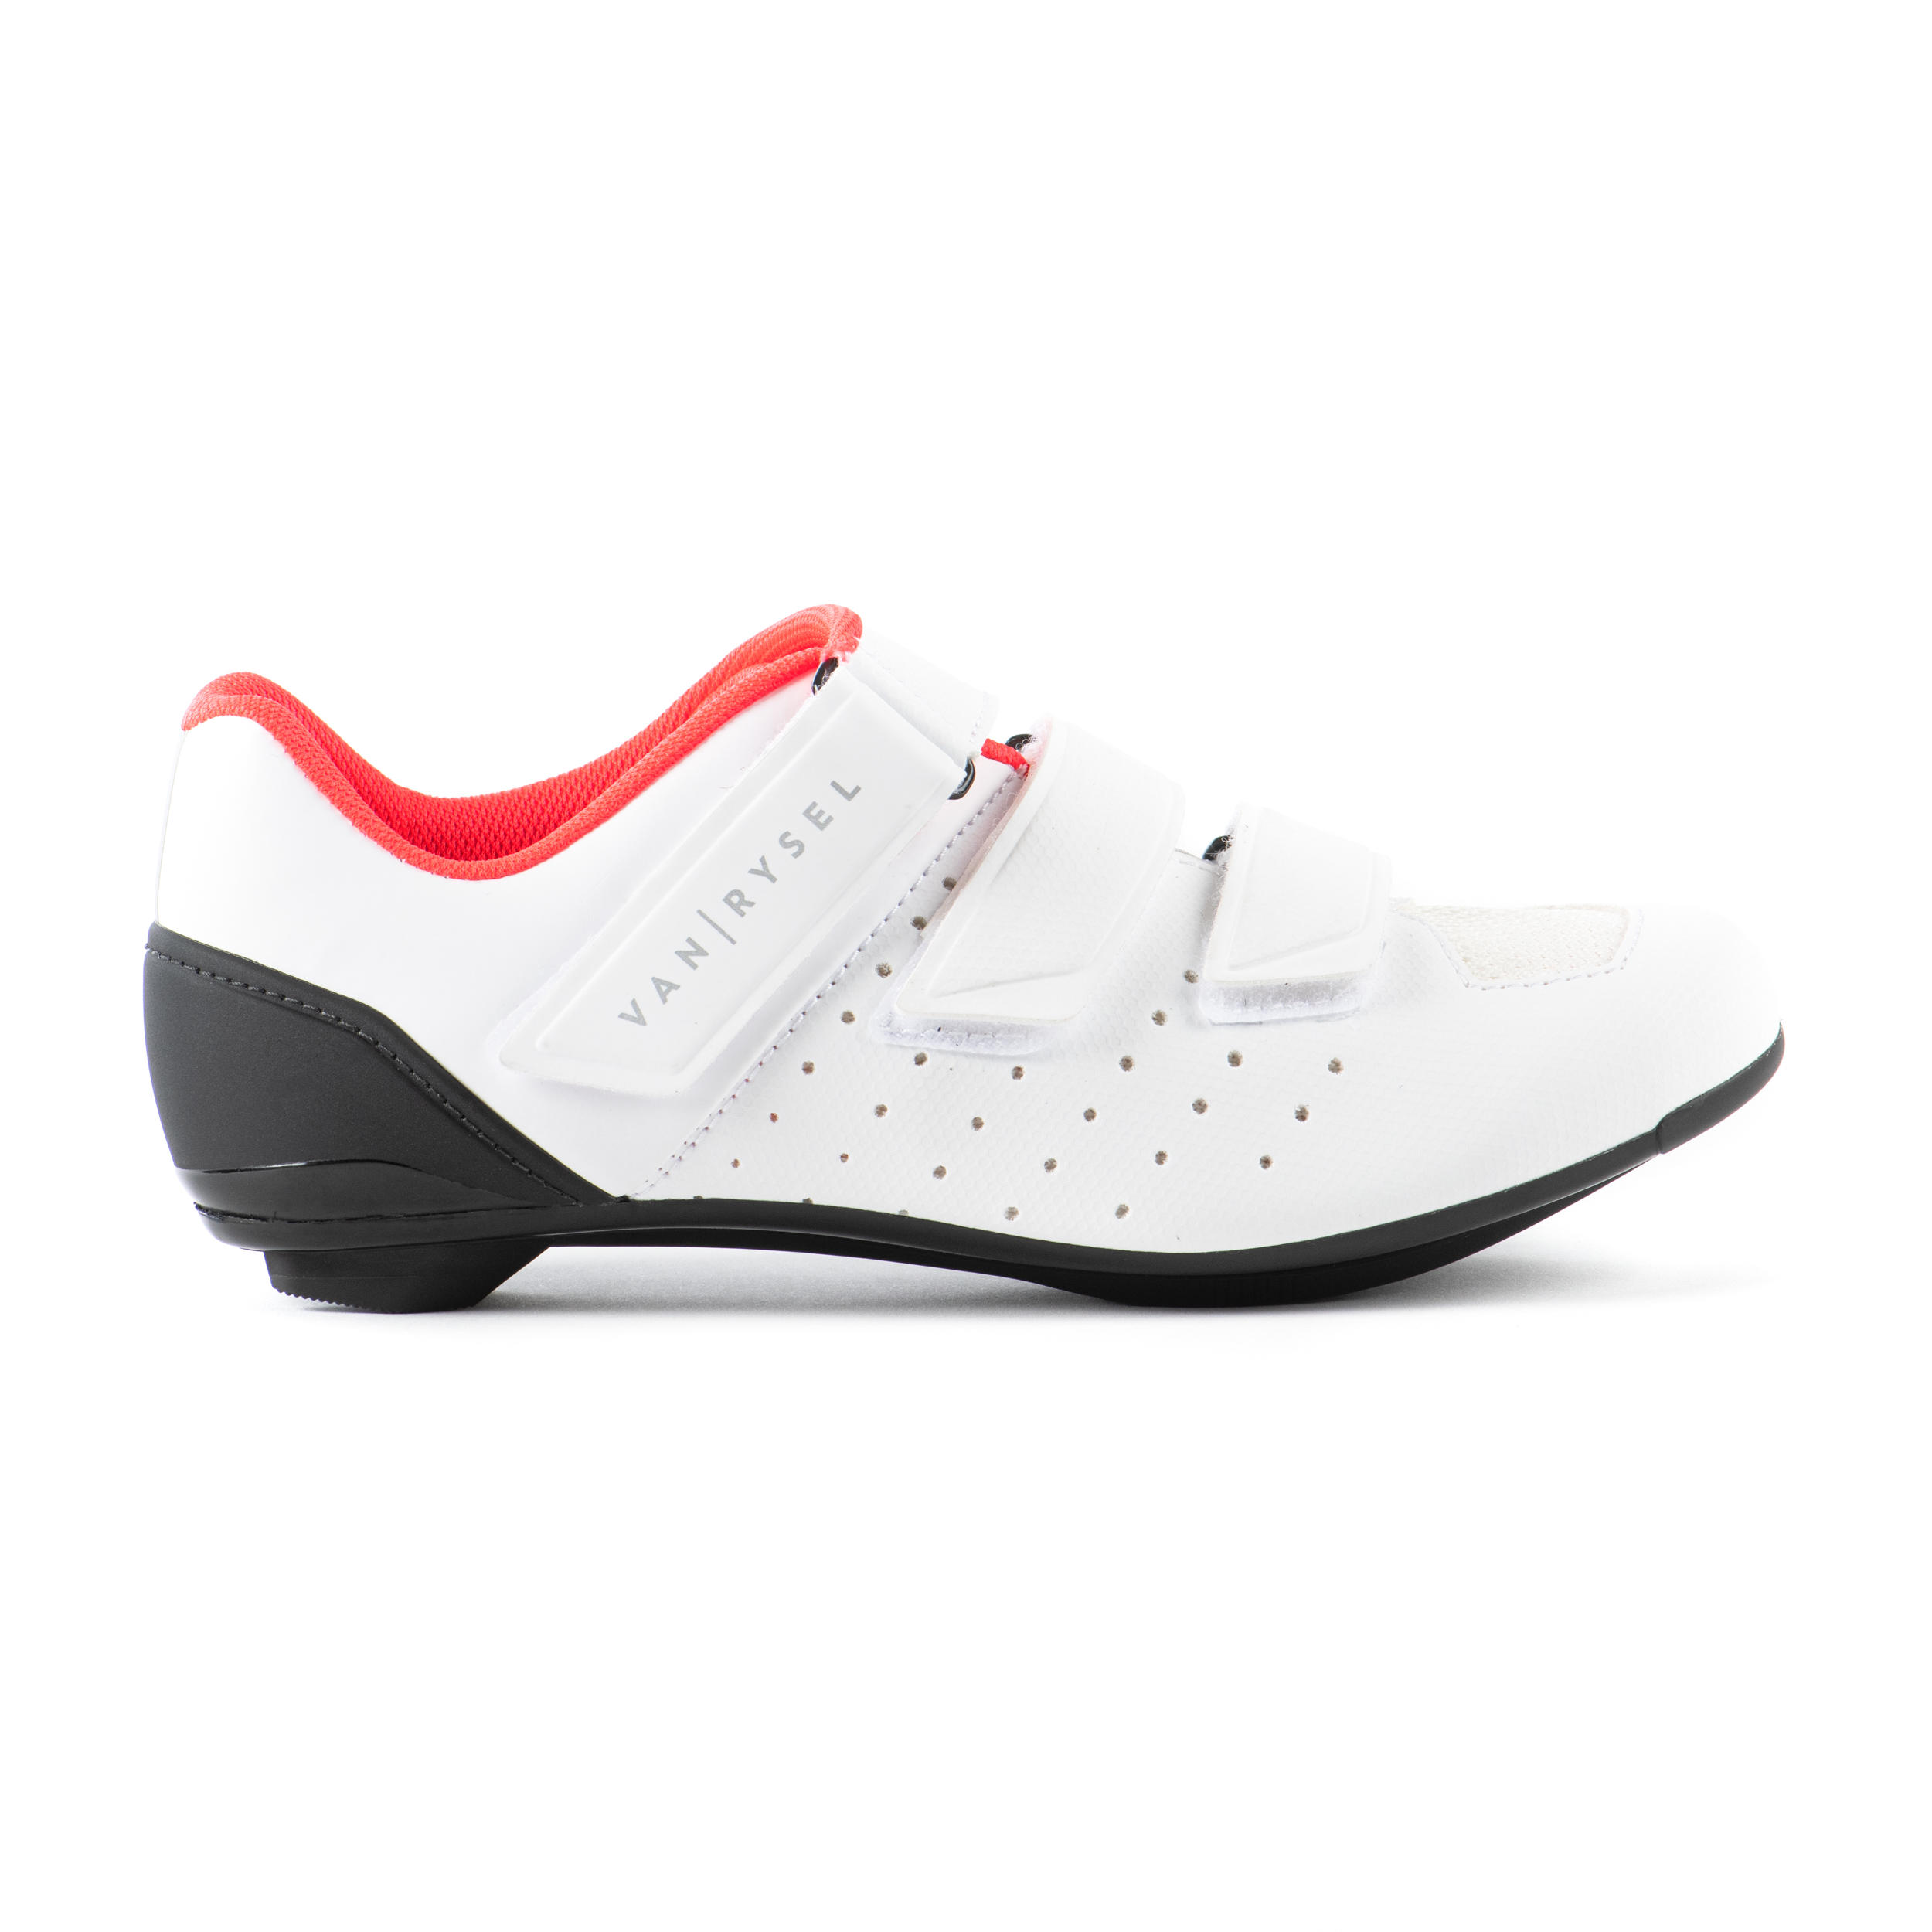 decathlon bowling shoes